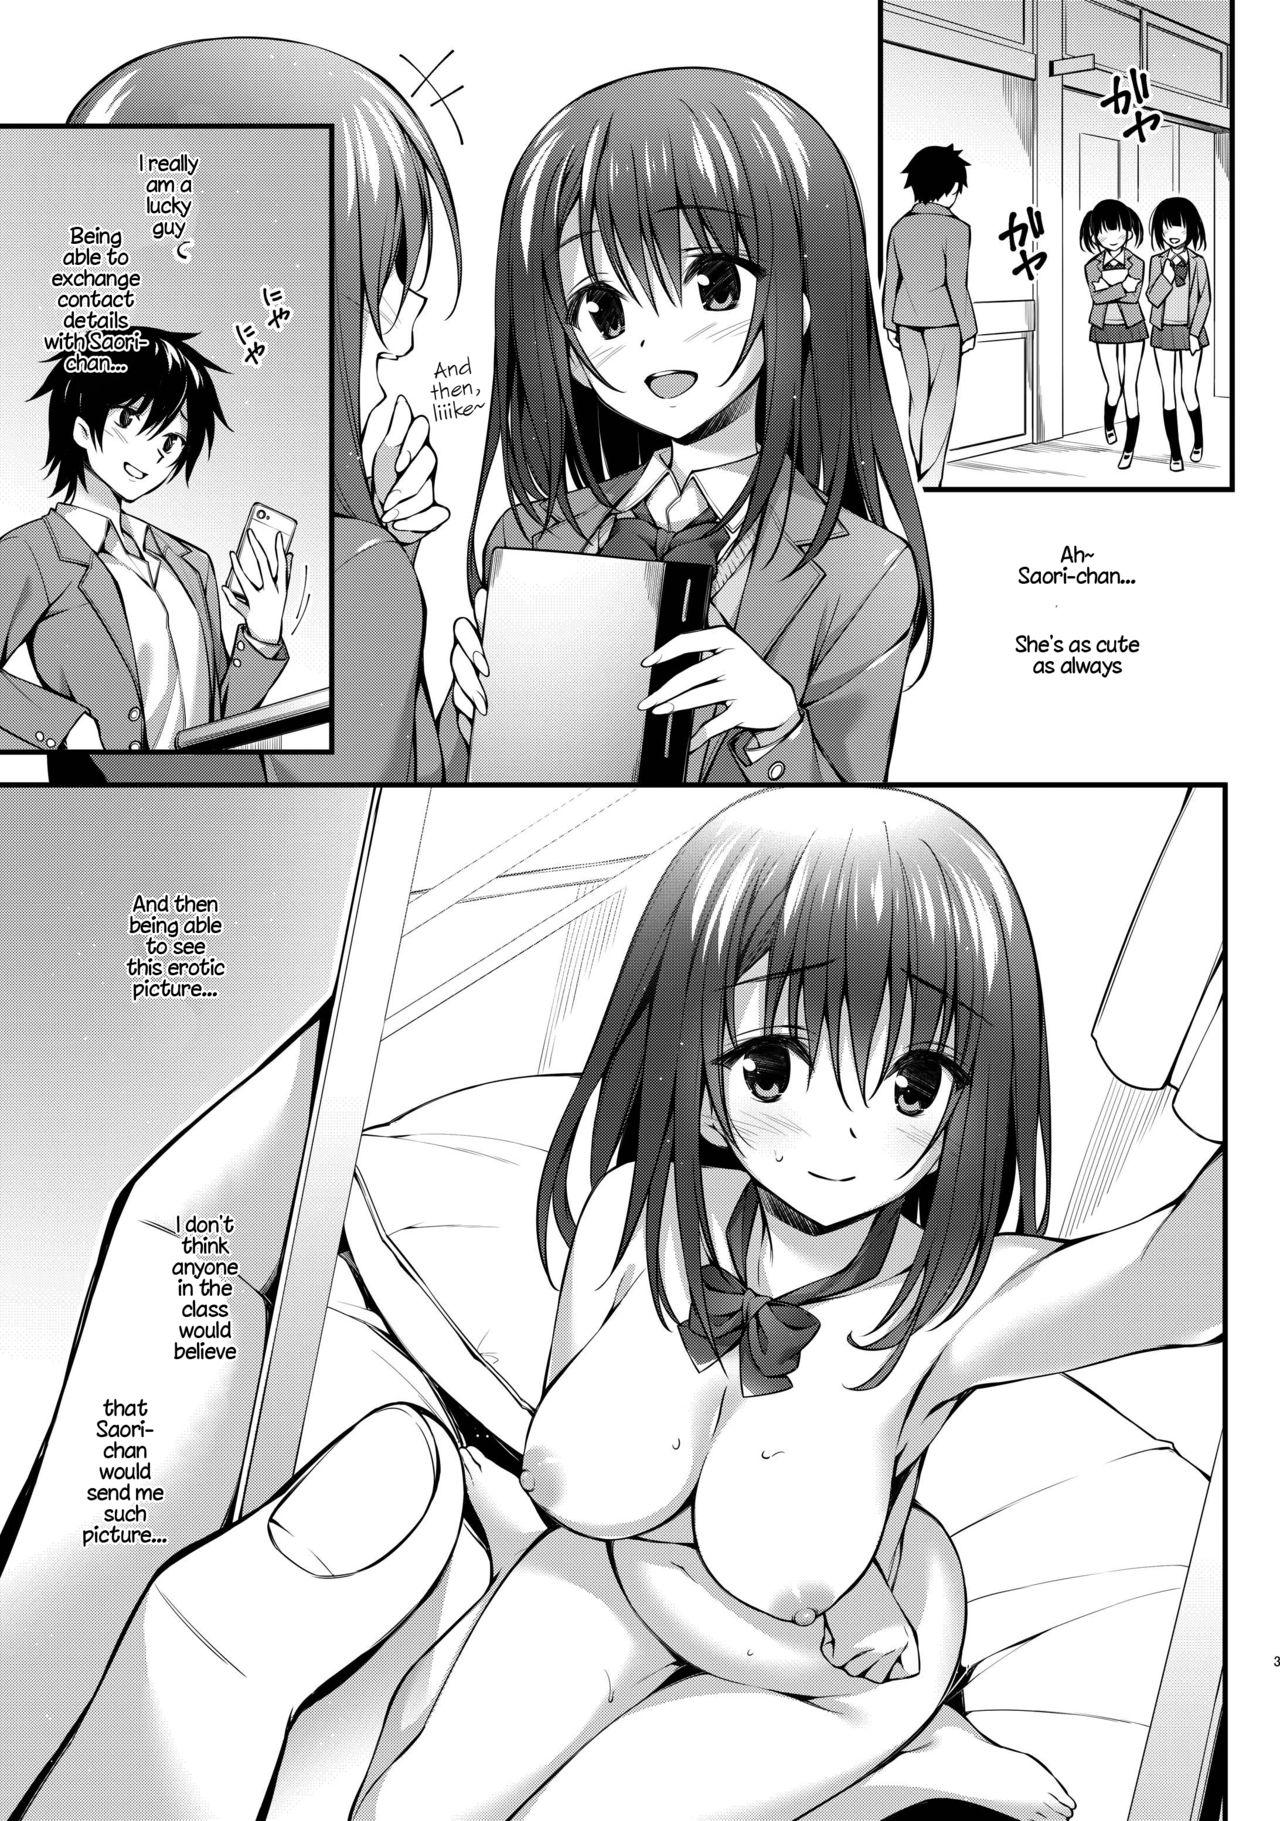 Muscle Classmate no Onnanoko kara Jidori Shashin Mitai nano ga Okurarete Kitanda kedo… | A Female Classmate Sent Her Selfie to Me… Glamour - Page 3